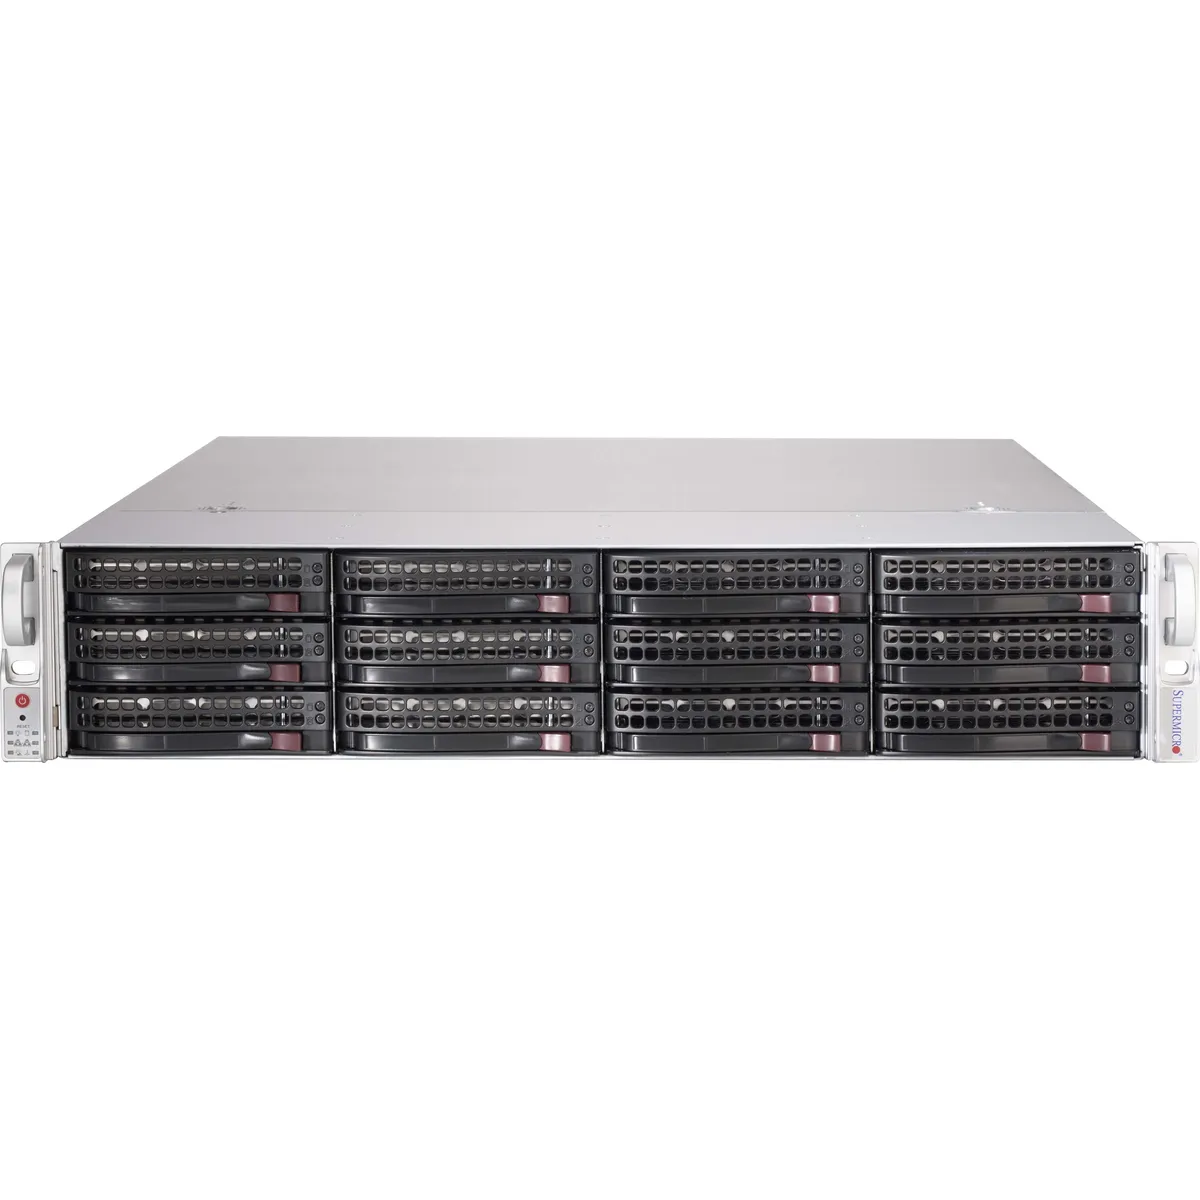 SuperMicro CSE-826 (X9DRi-LN4F+ Rev1.20) 12x LFF Hot-Swap SAS 2U Barebones Server